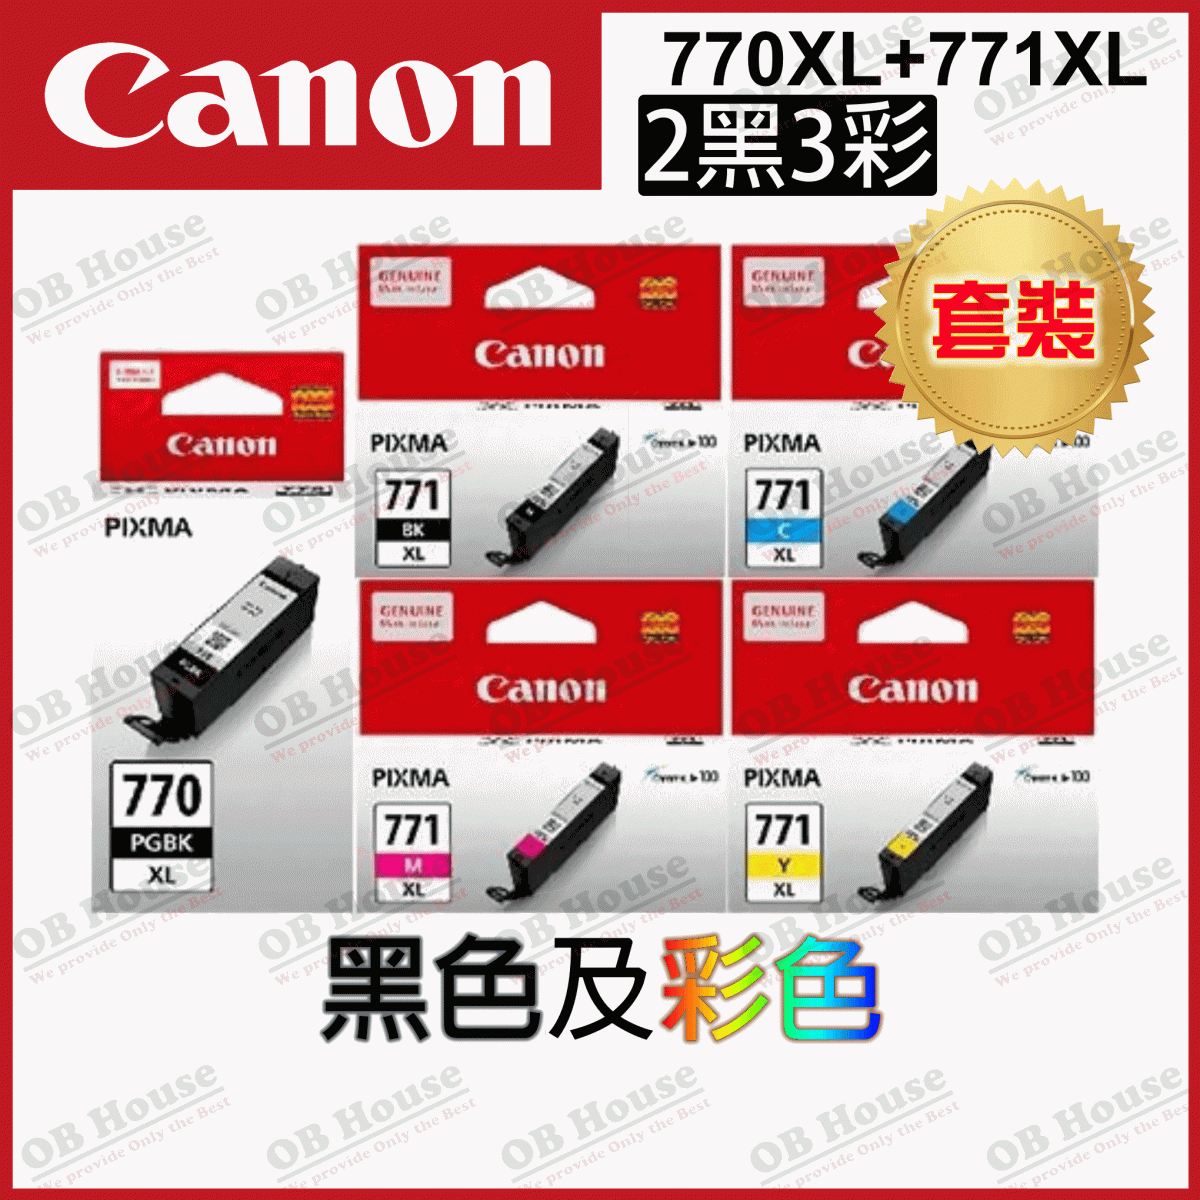 [COMBO] 770XL + 771XL High Capacity Ink Cartridge - Includes : PGI-770XL, CLI-771XLBK, CLI-771XLC, CLI-771XLM, CLI-771XLY #PGI770XL #CLI771XL